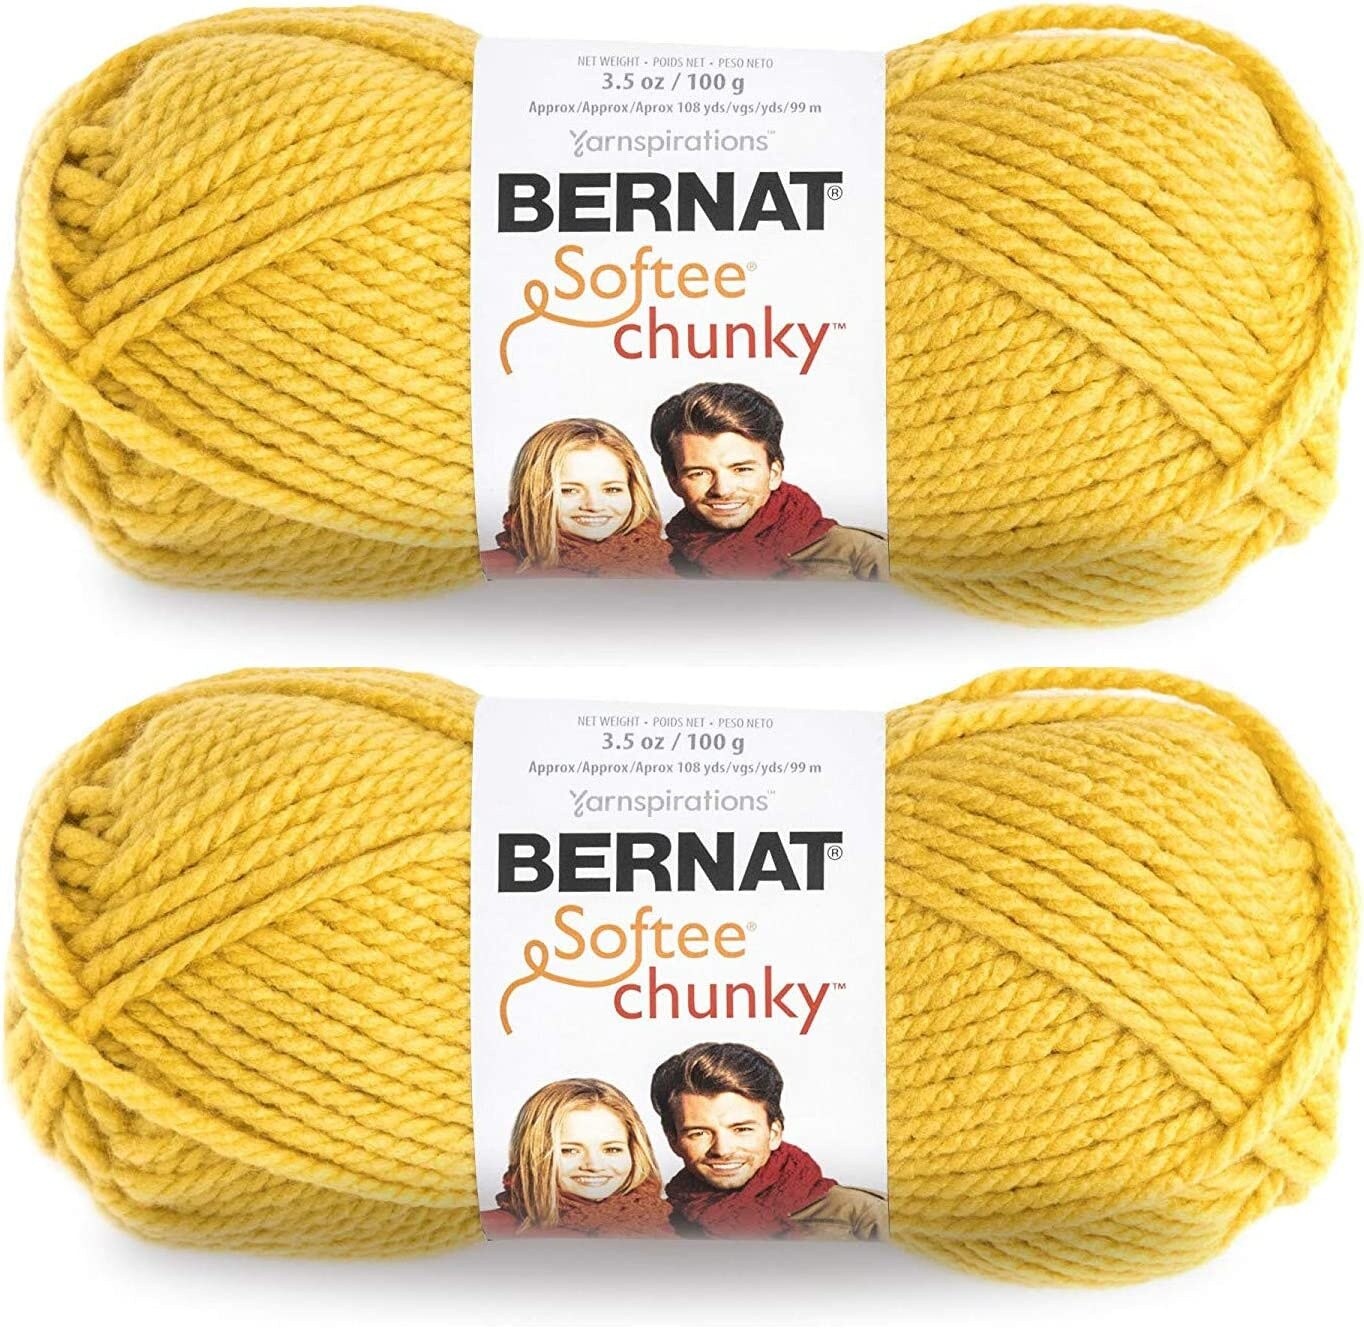 Pack of 2) Bernat Softee Chunky Yarn-Glowing Gold